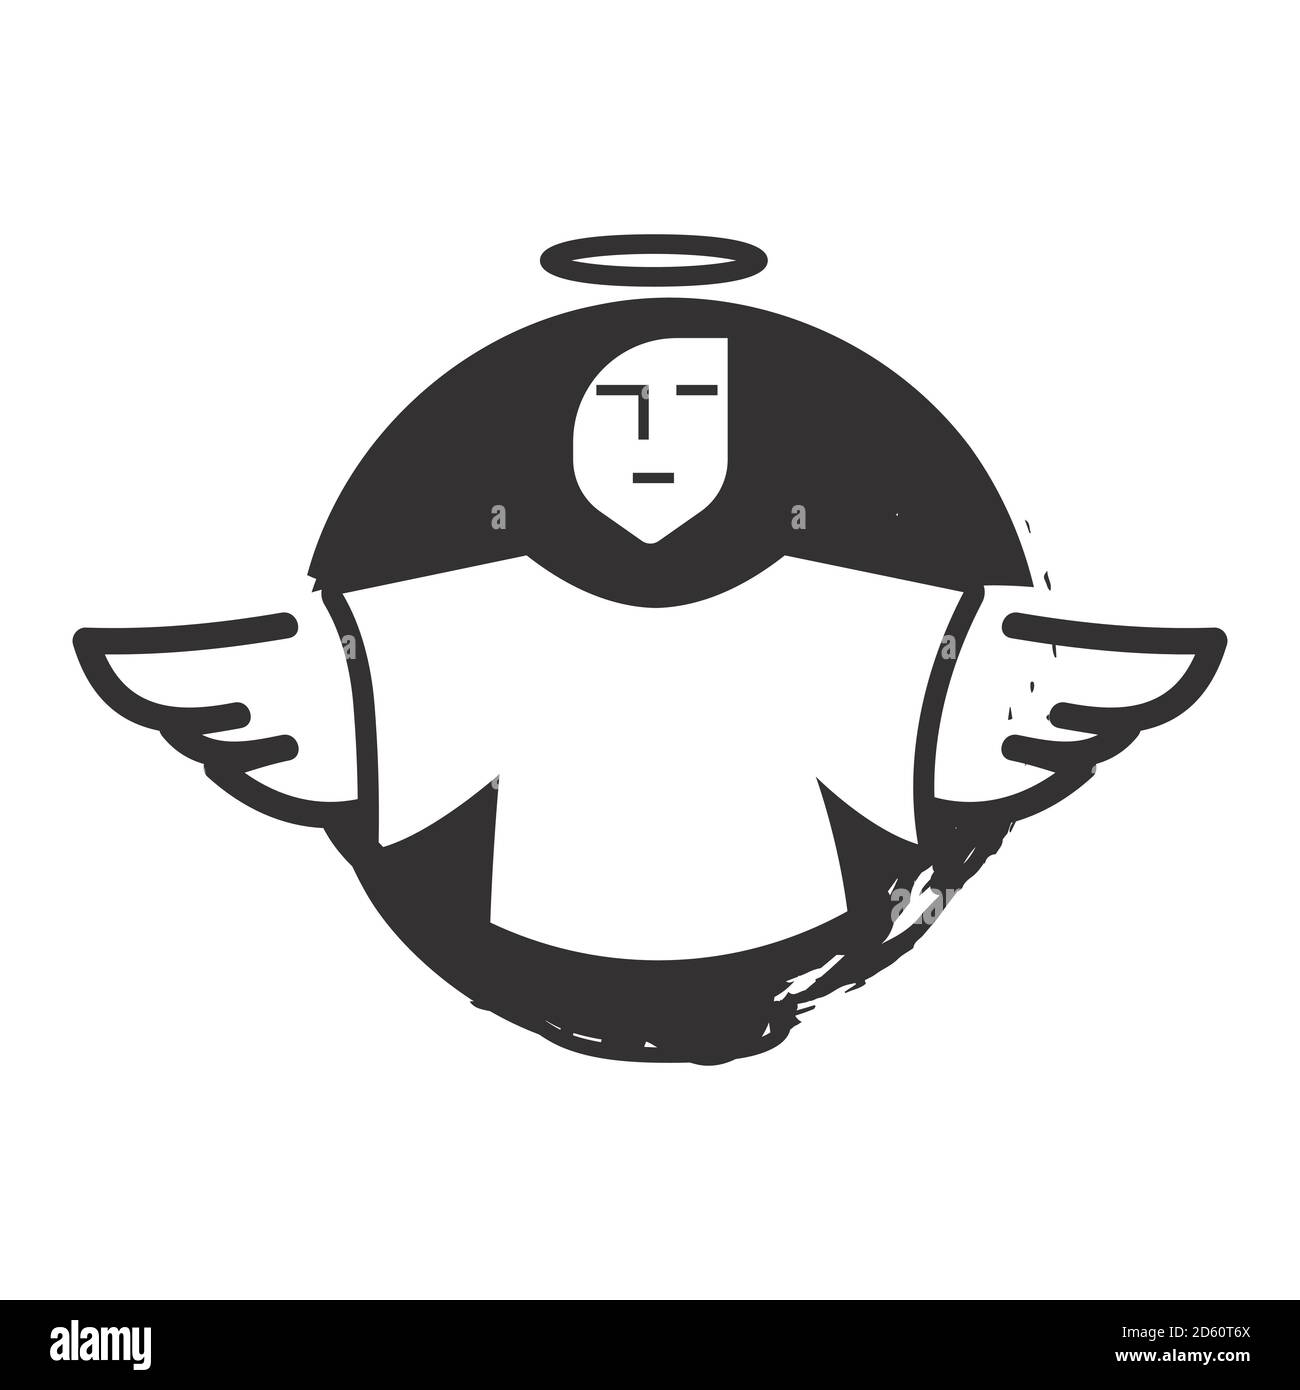 creative custom man with wings for angel  logo design inspiration vector illustration Stock Vector